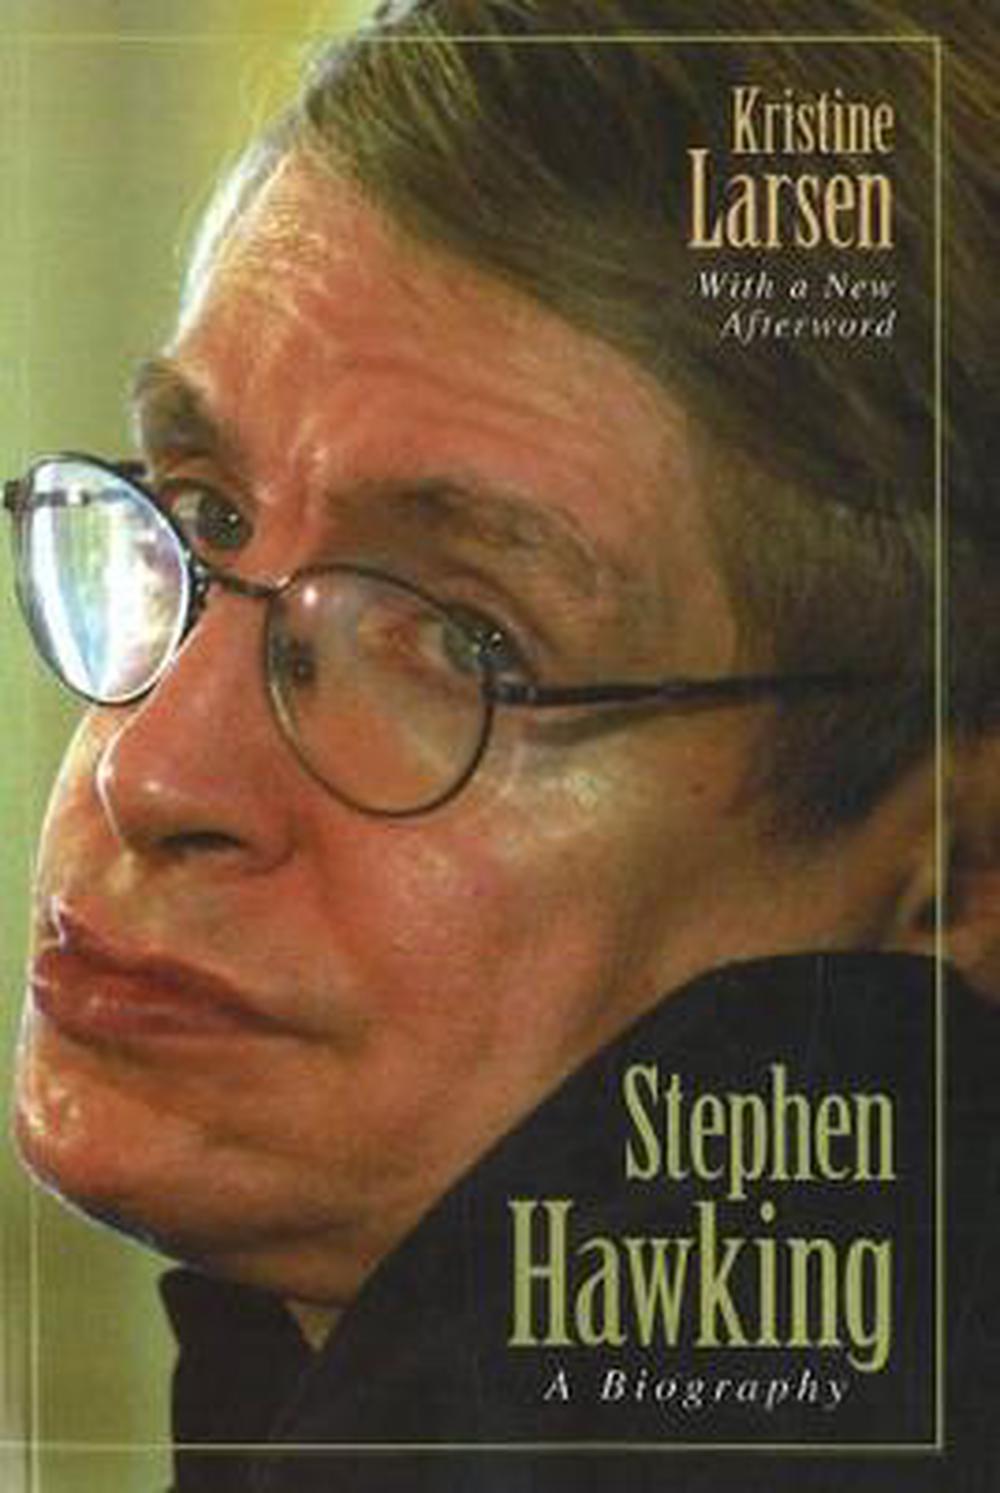 stephen hawking a biography by kristine larsen